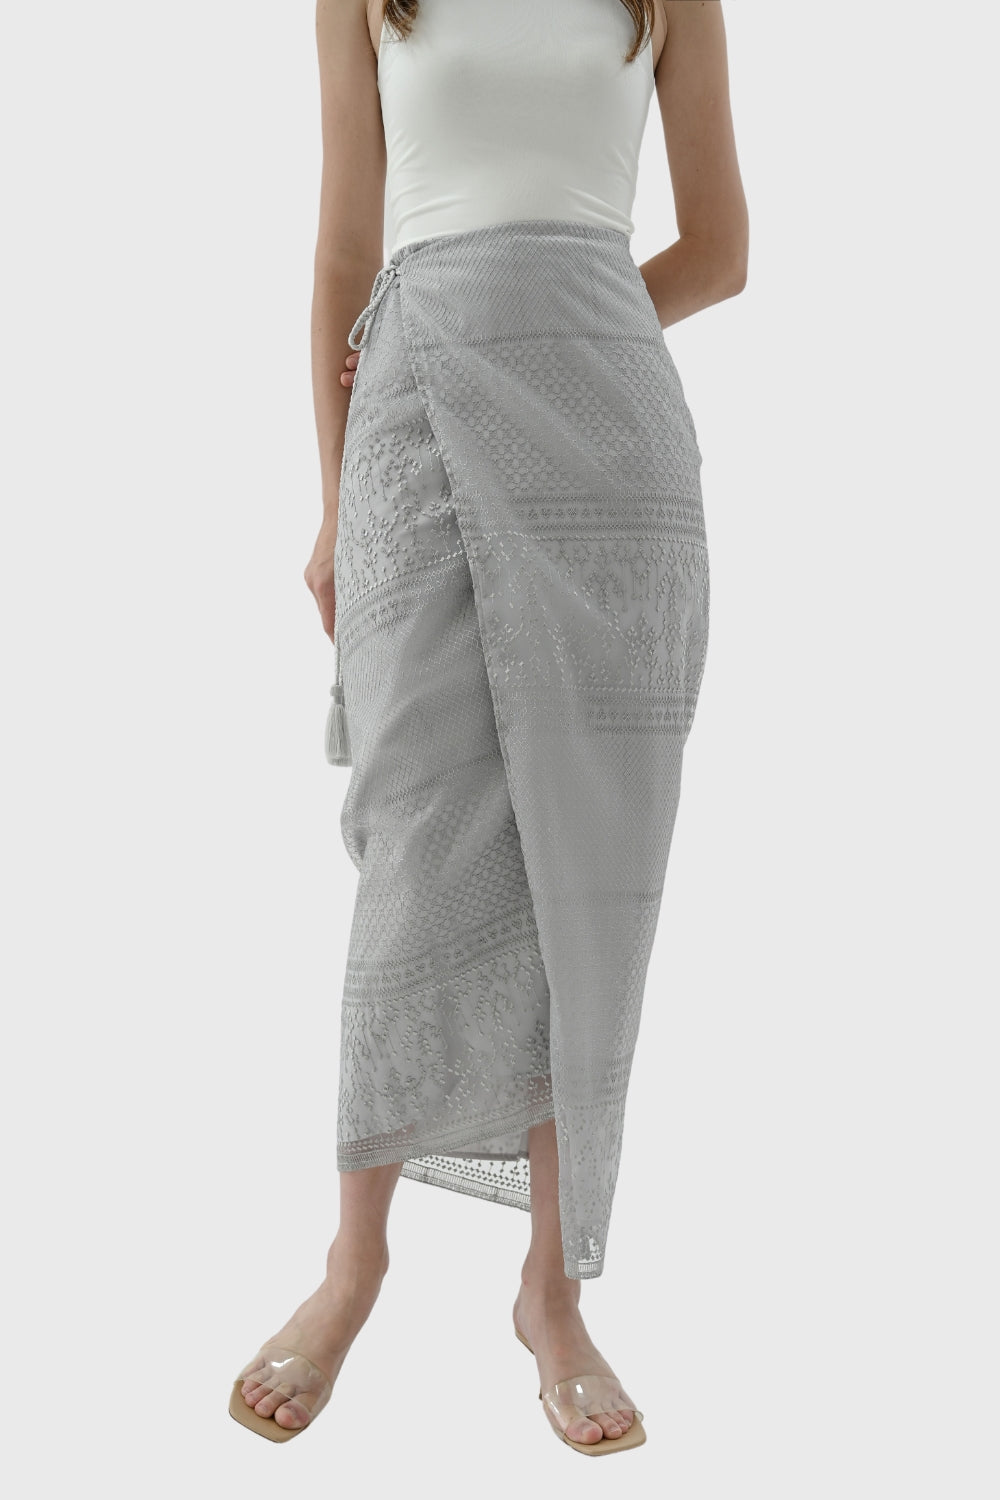 Mina Wrap Skirt in Silver Grey